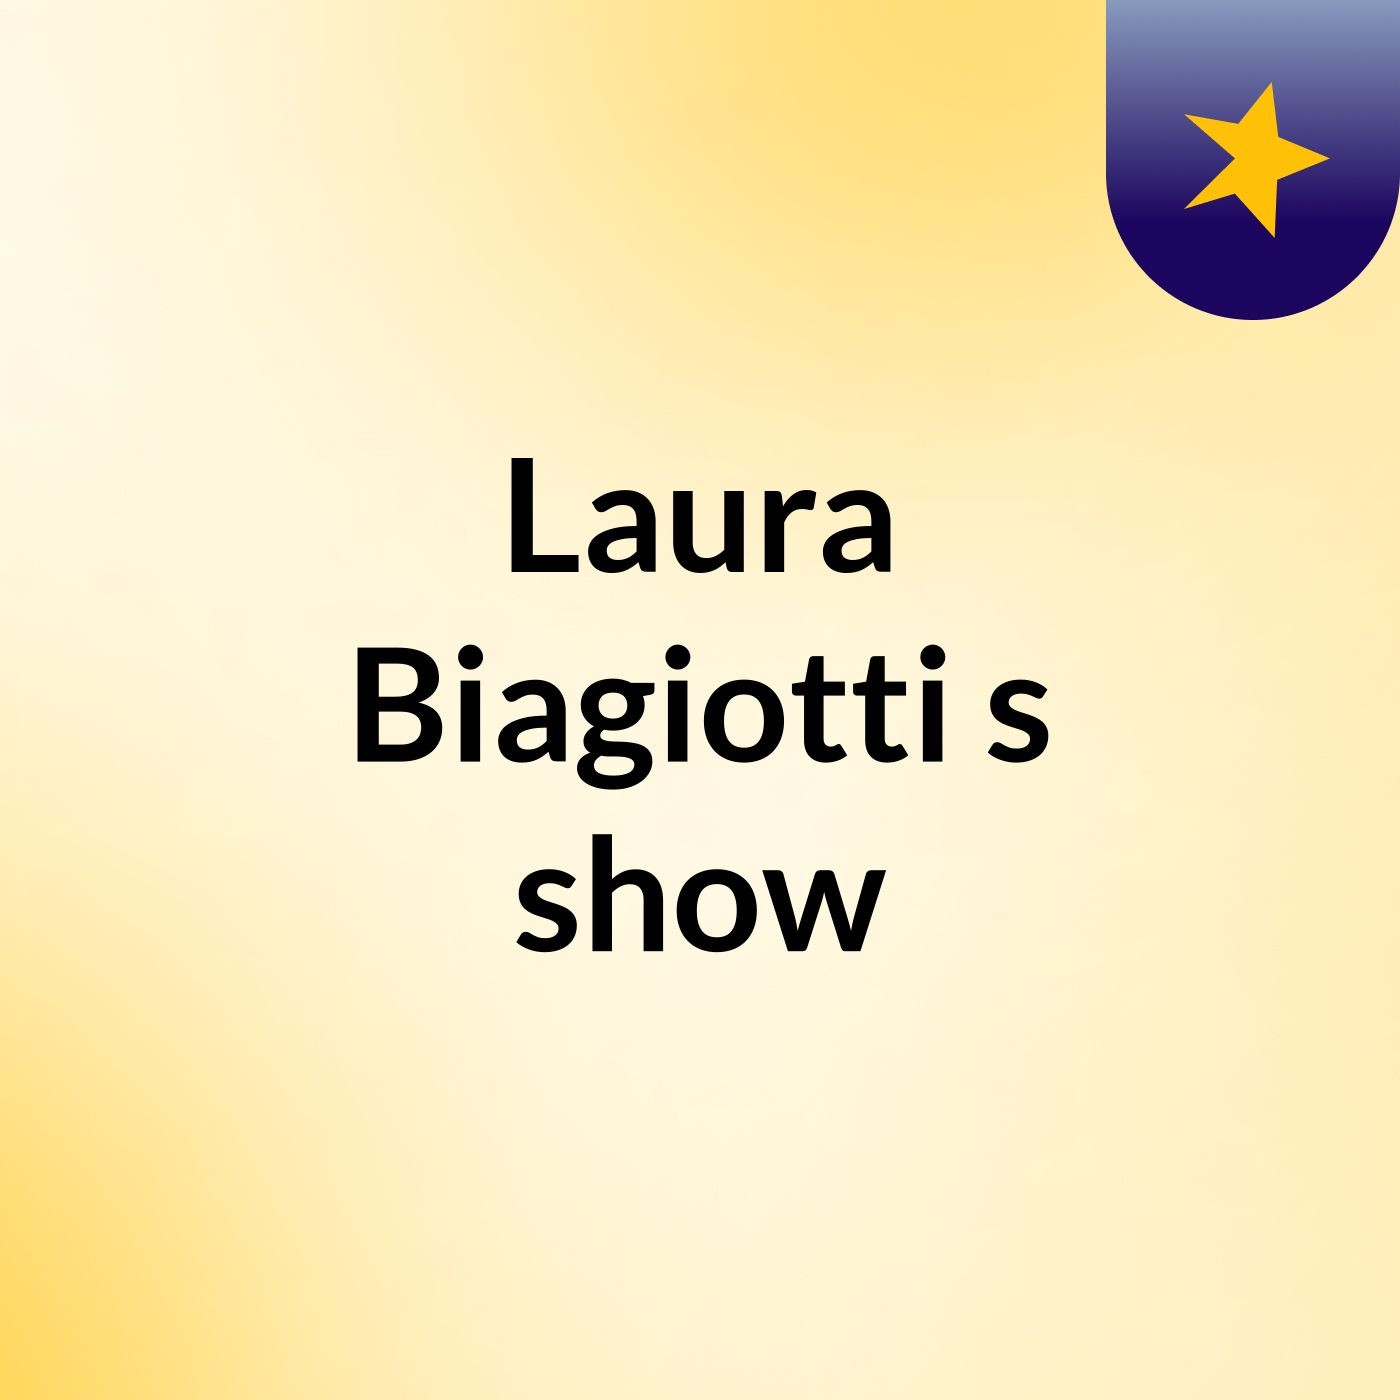 Laura Biagiotti's show